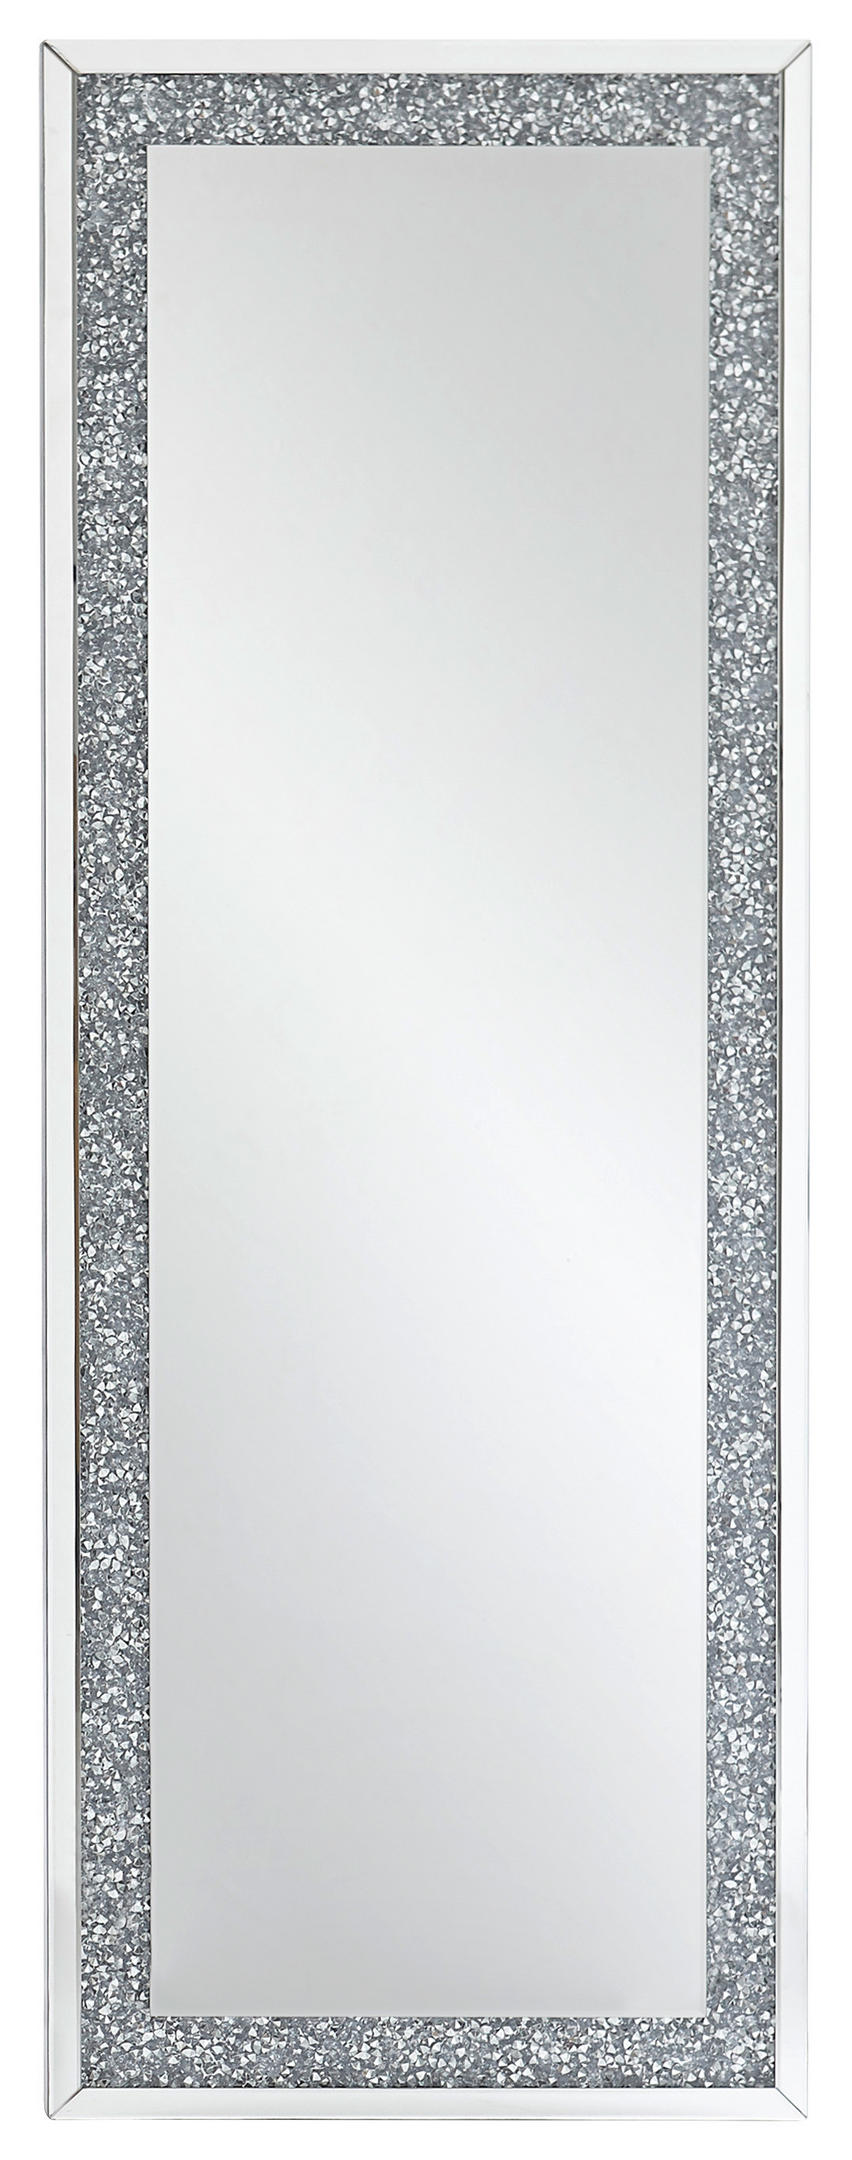 Spiegel 60x160 cm Rahmen in Silberfarben shoppen